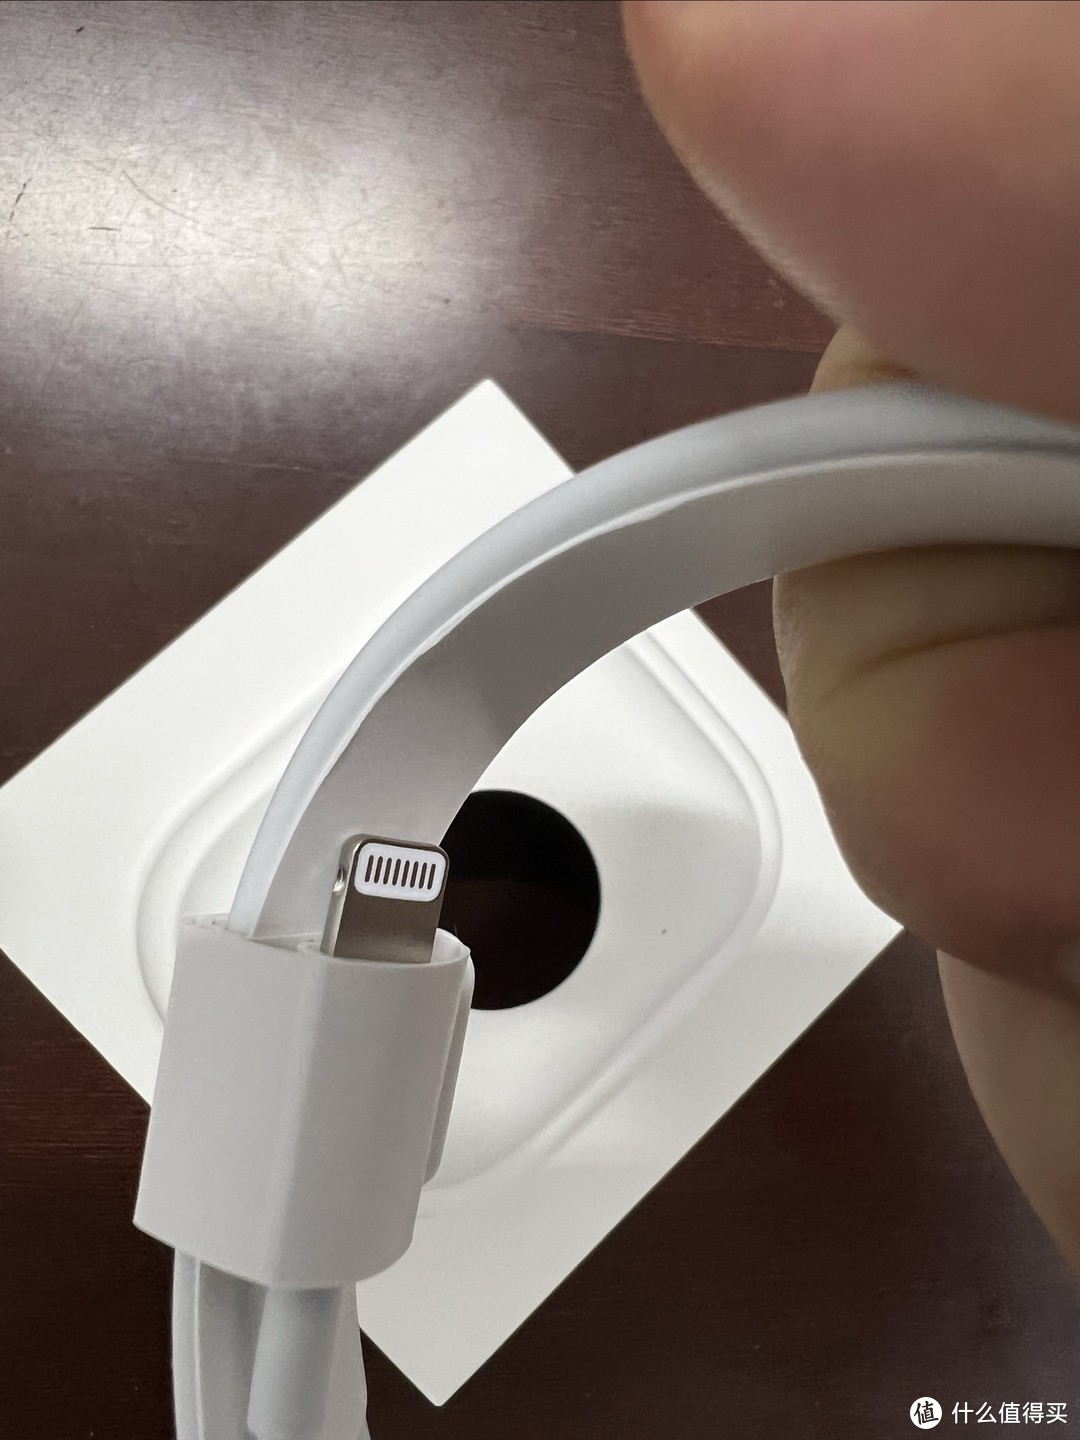 Apple AirPods Pro (第二代) ，一款很好的降噪耳机